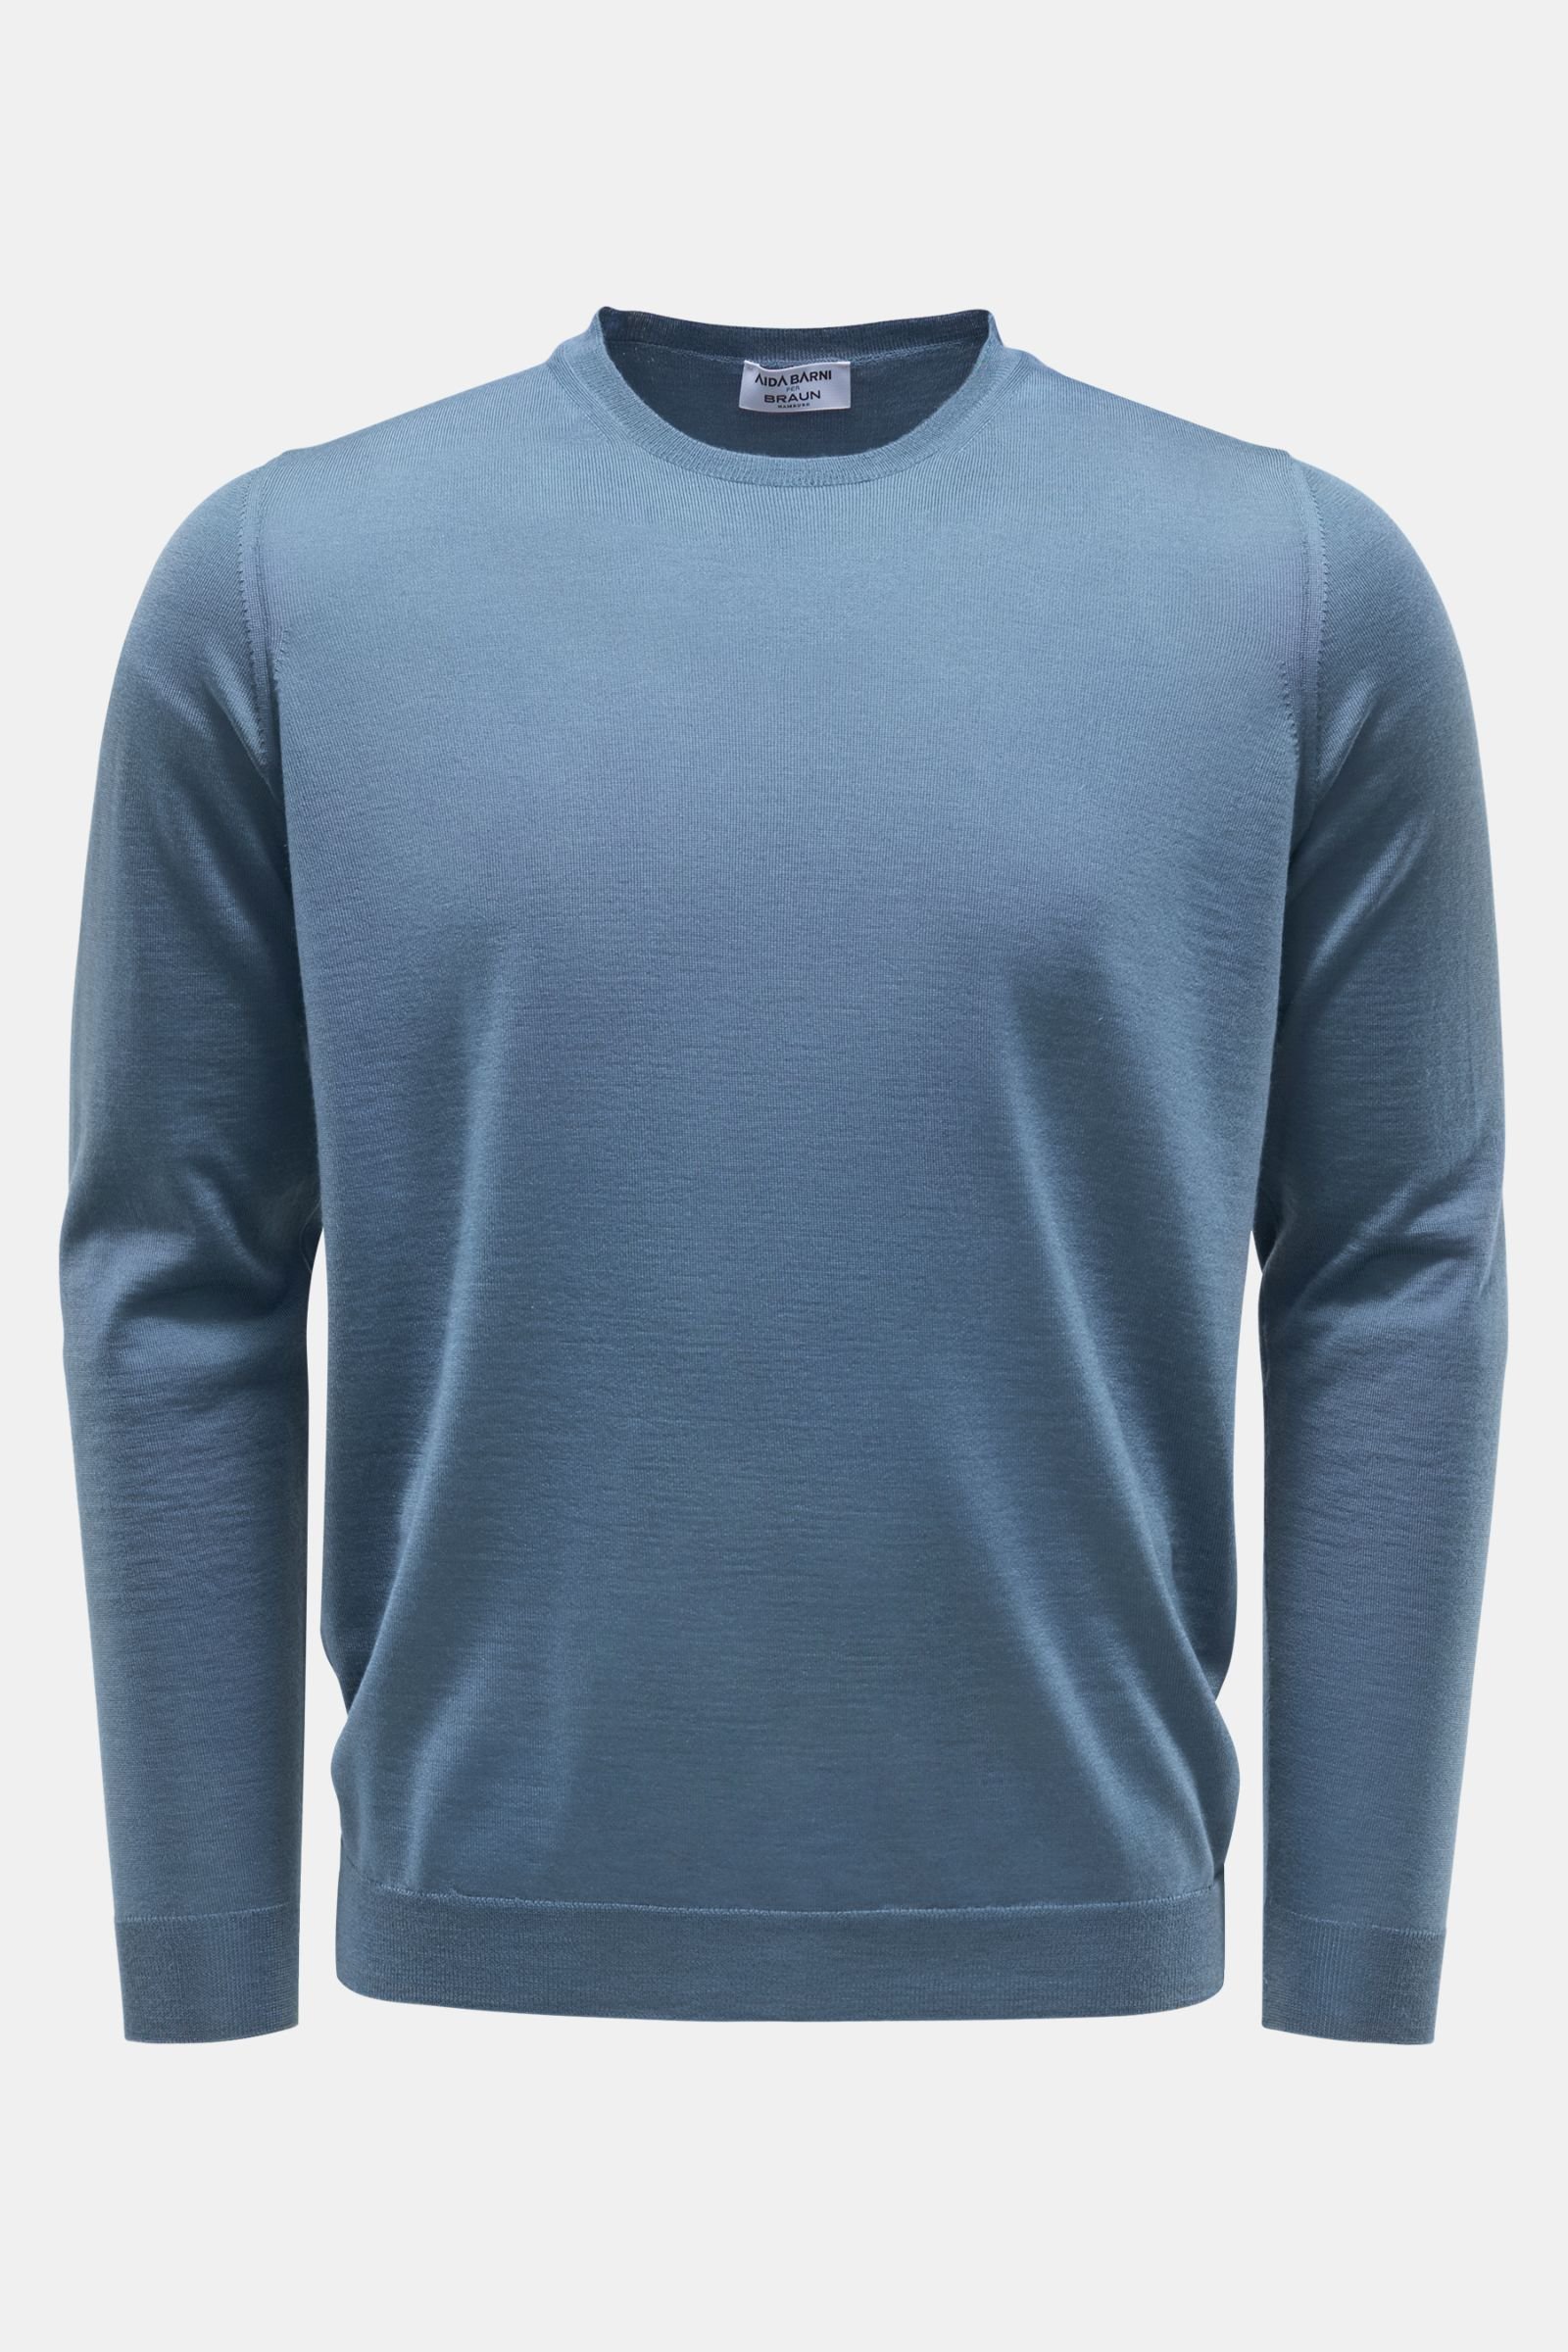 Cashmere fine knit crew neck jumper grey-blue